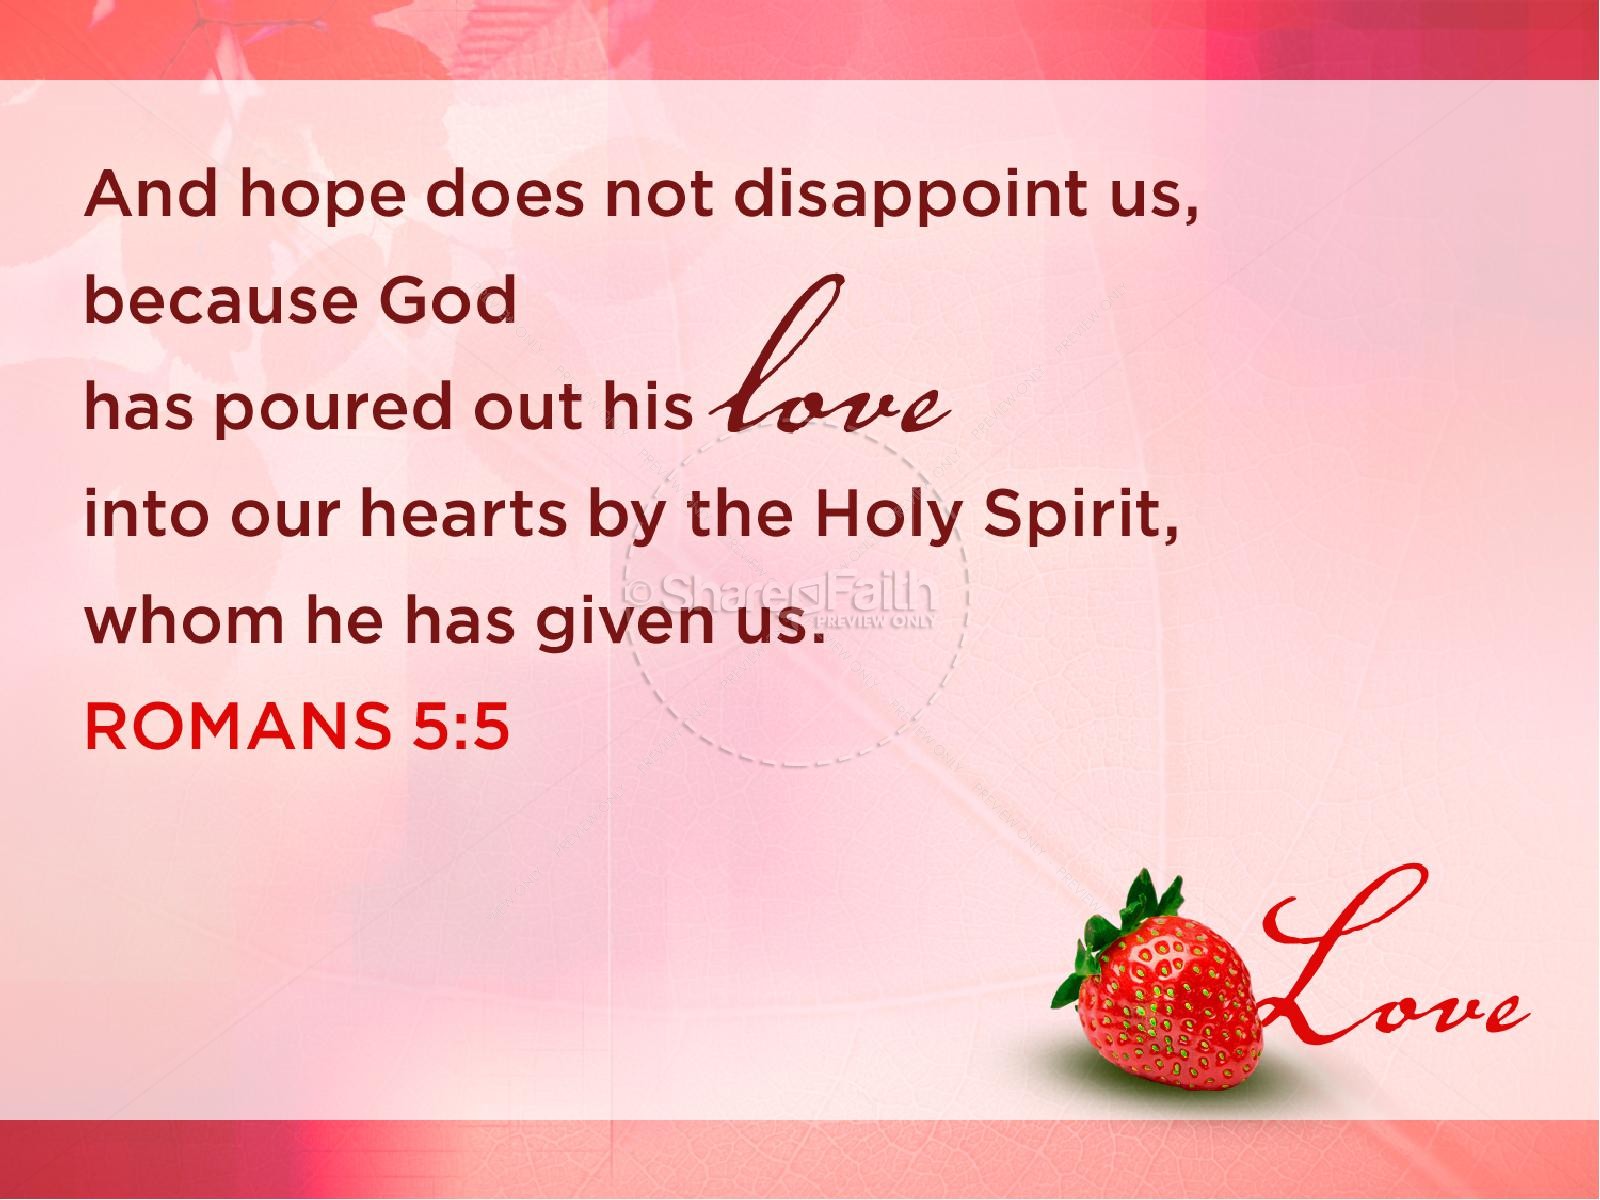 Love Fruit of the Spirit Pentecost PowerPoint Template Thumbnail 7